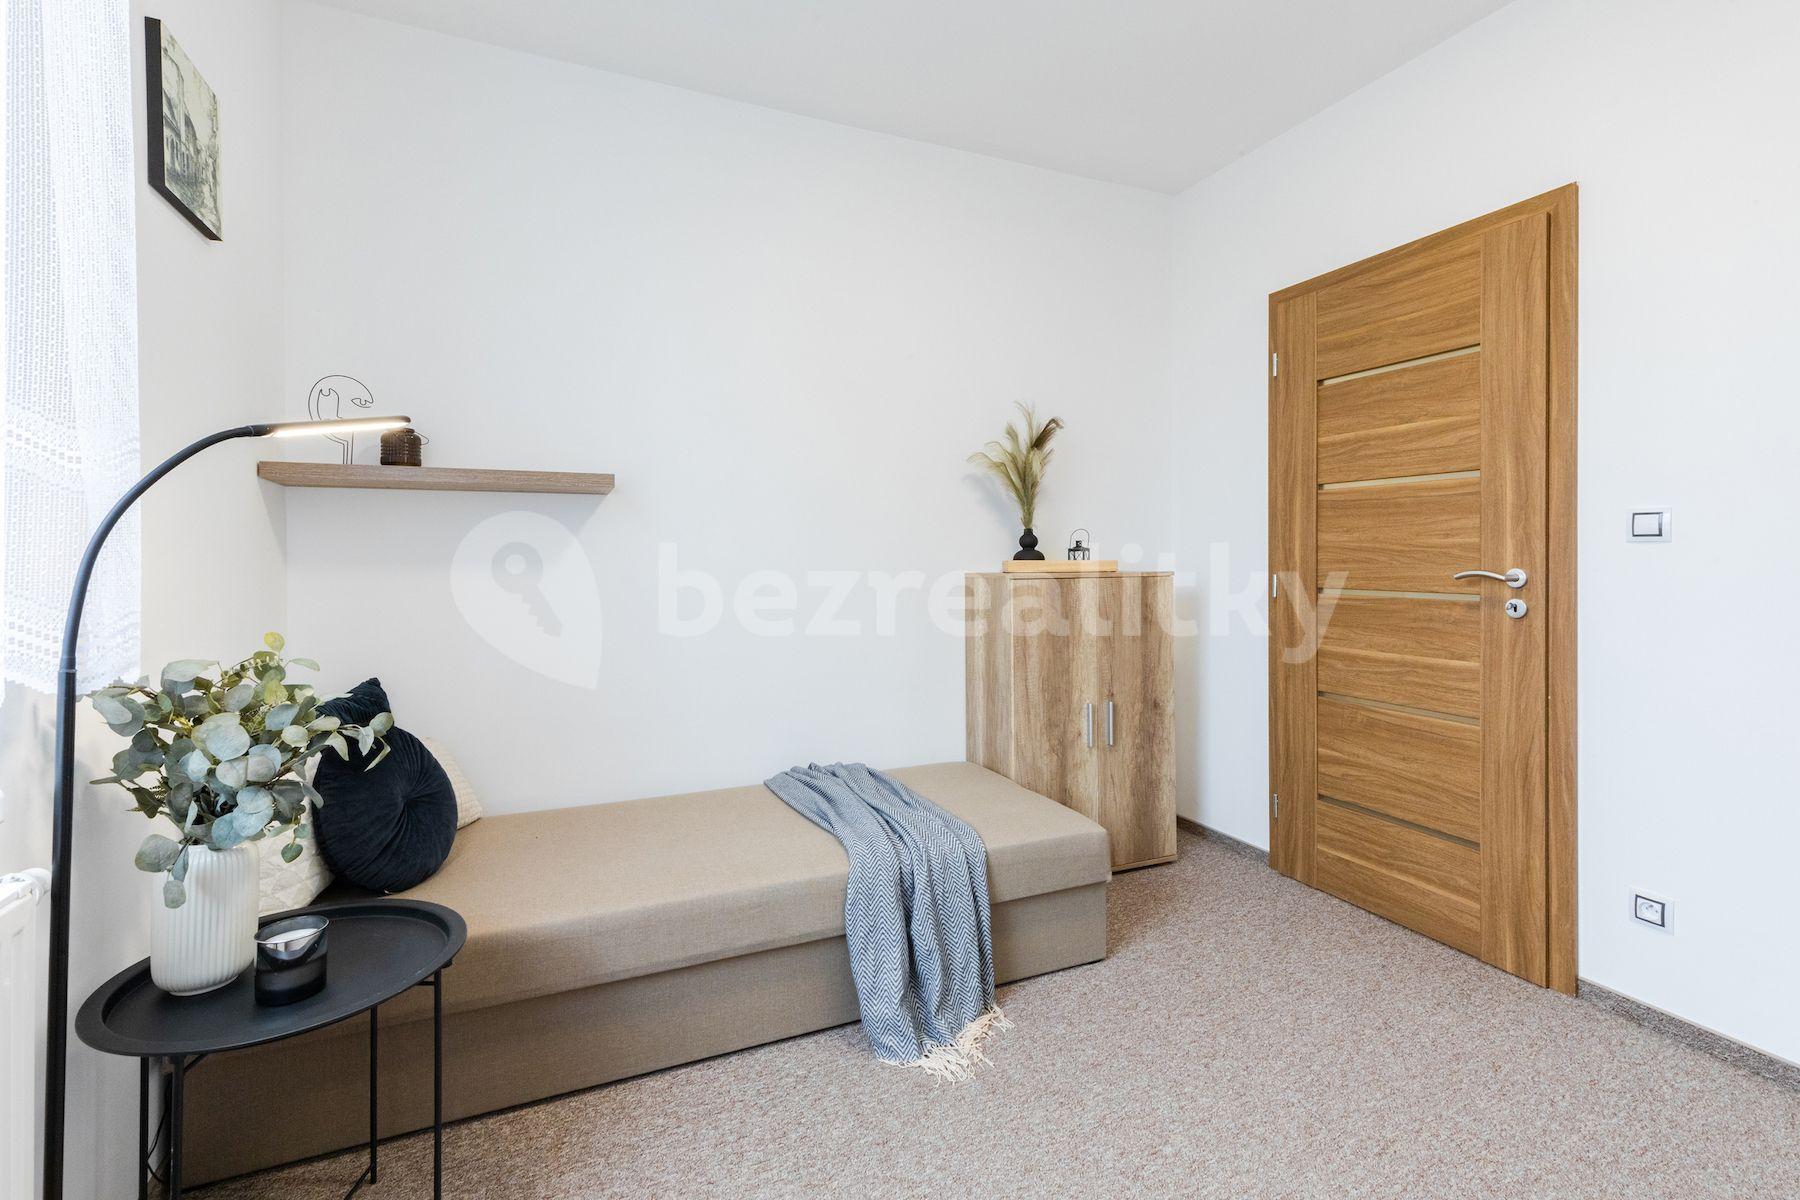 2 bedroom with open-plan kitchen flat for sale, 120 m², Albrechtice nad Vltavou, Jihočeský Region